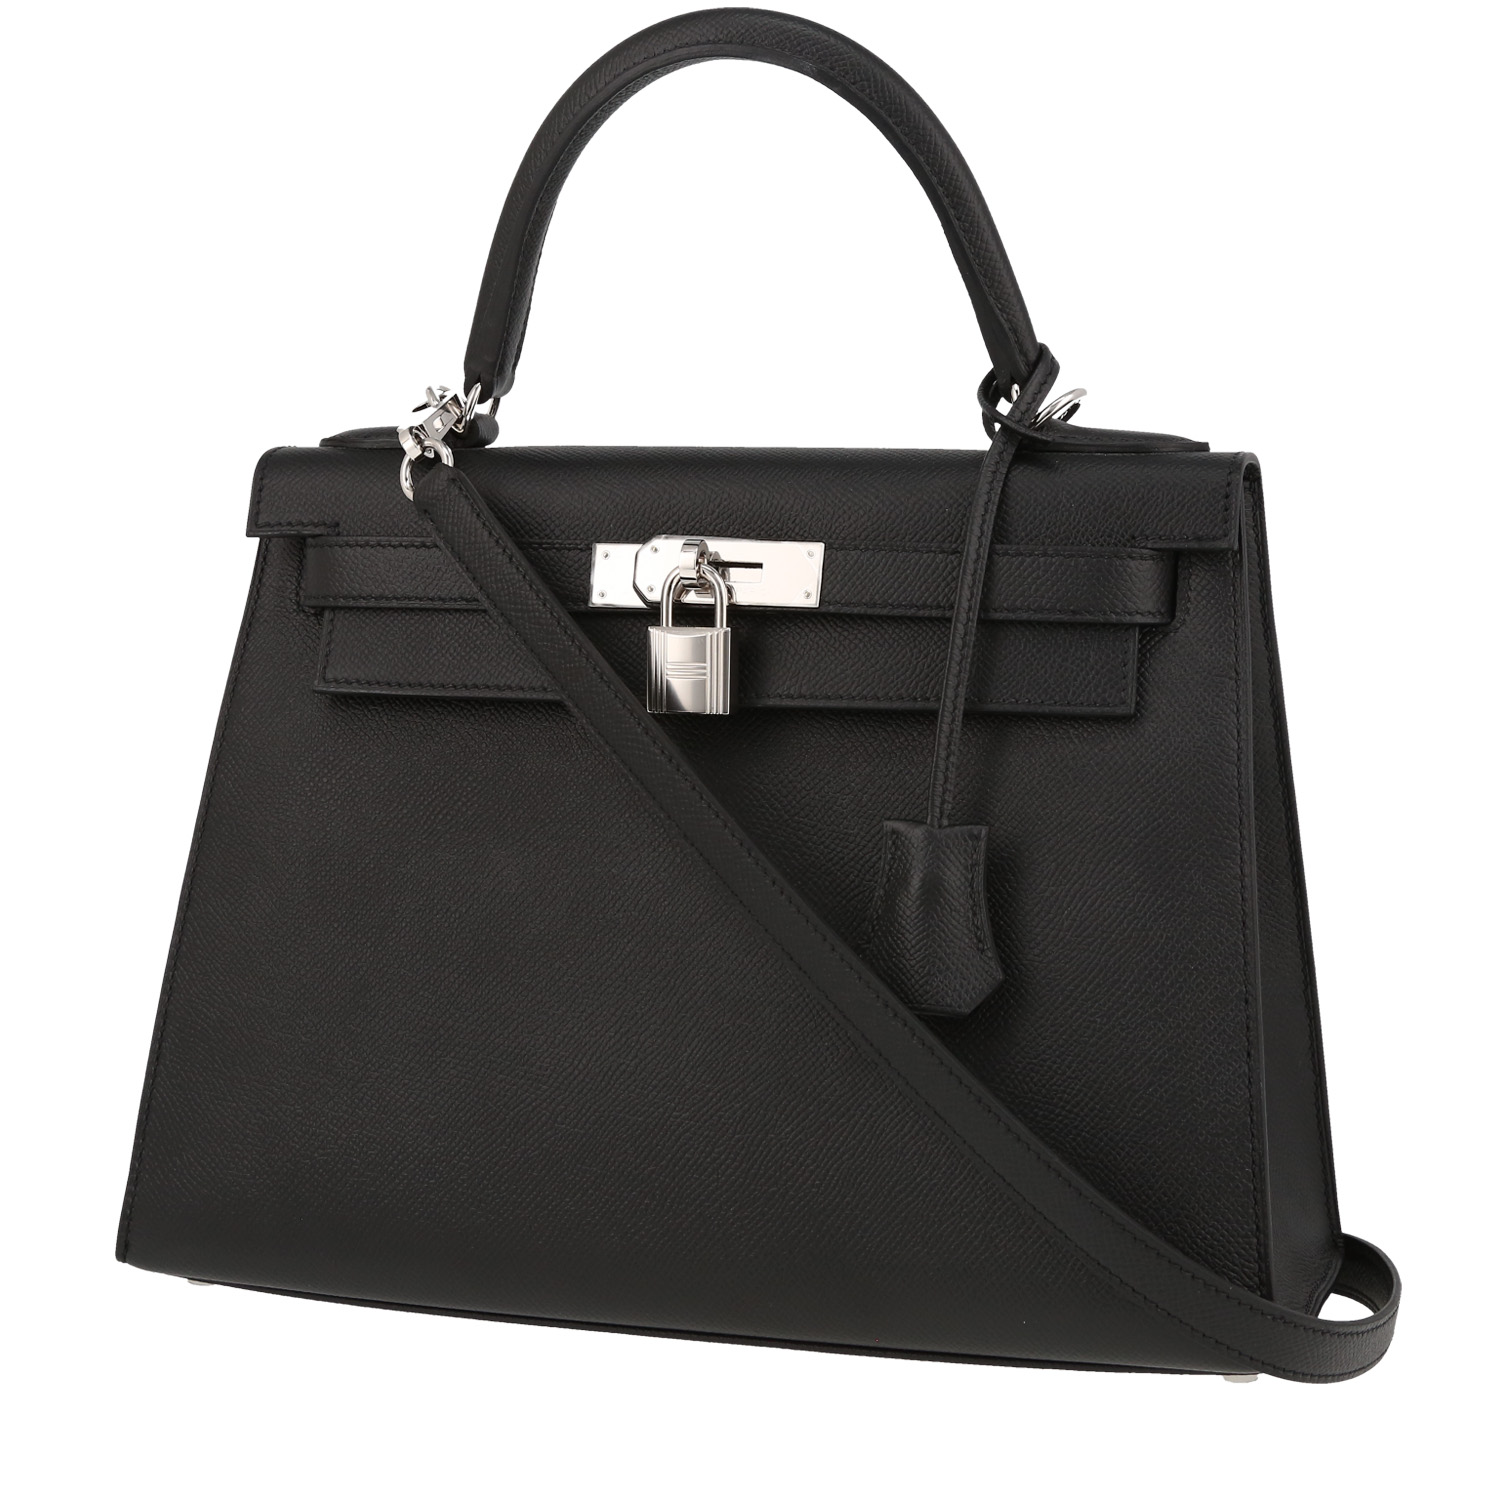 Hermès Kelly 28 cm handbag in black epsom leather - 00pp